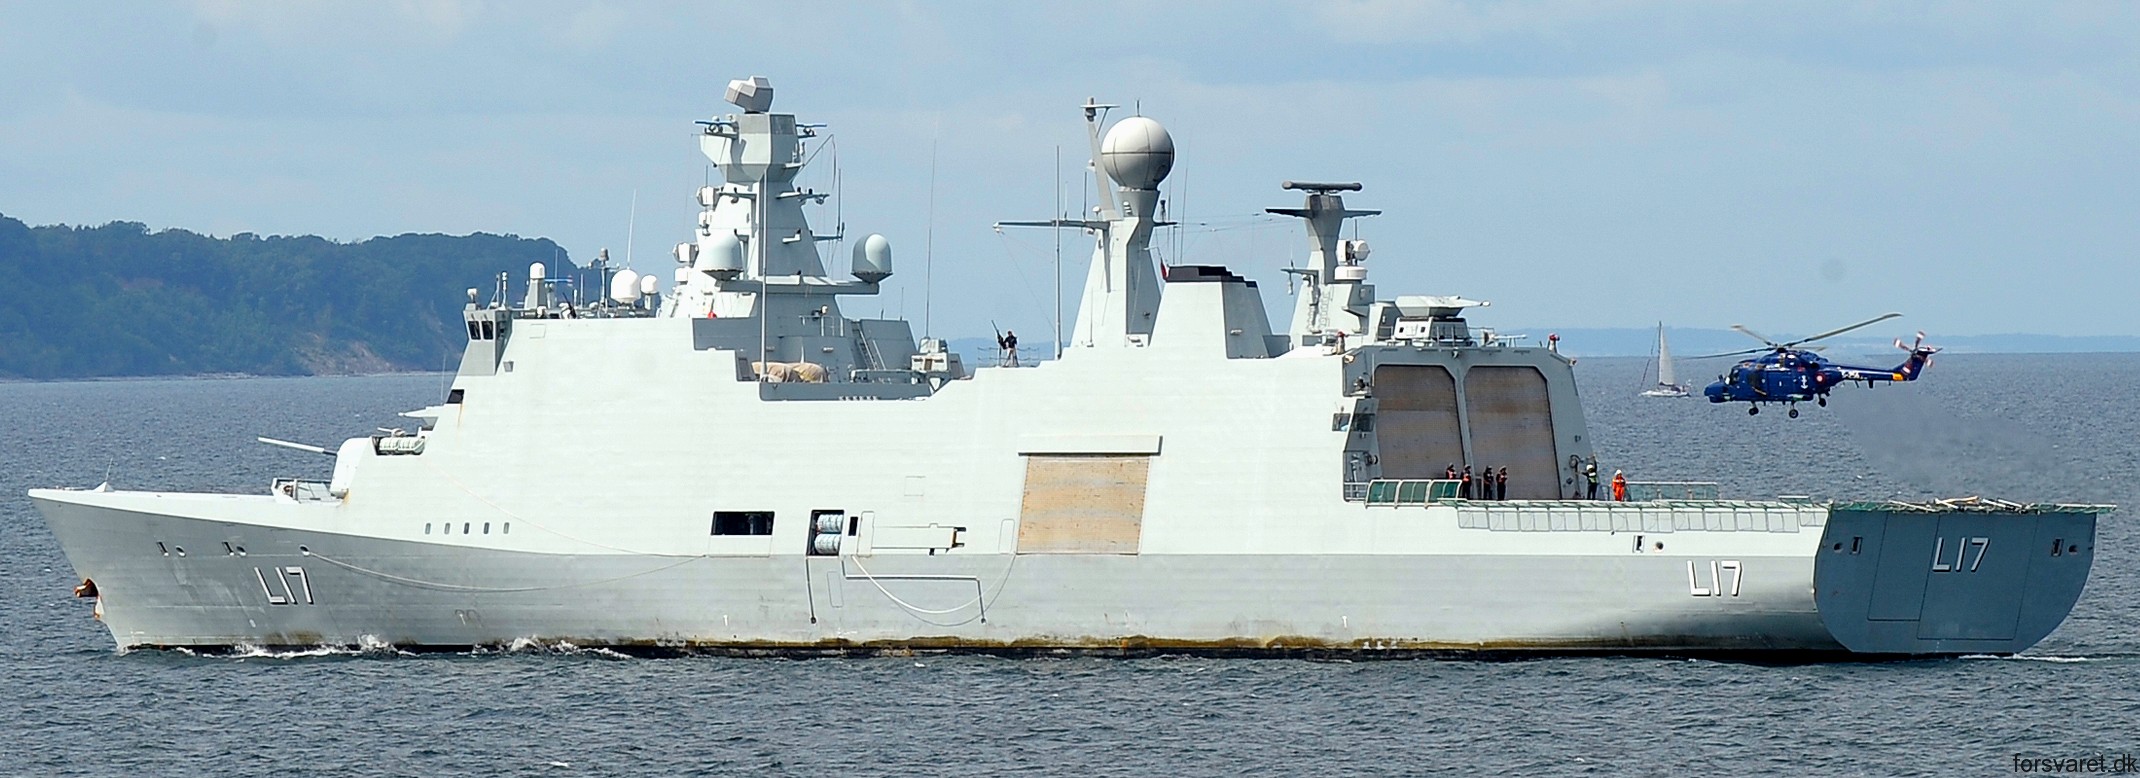 f-342 hdms esbern snare l-17 frigate command support ship royal danish navy 37